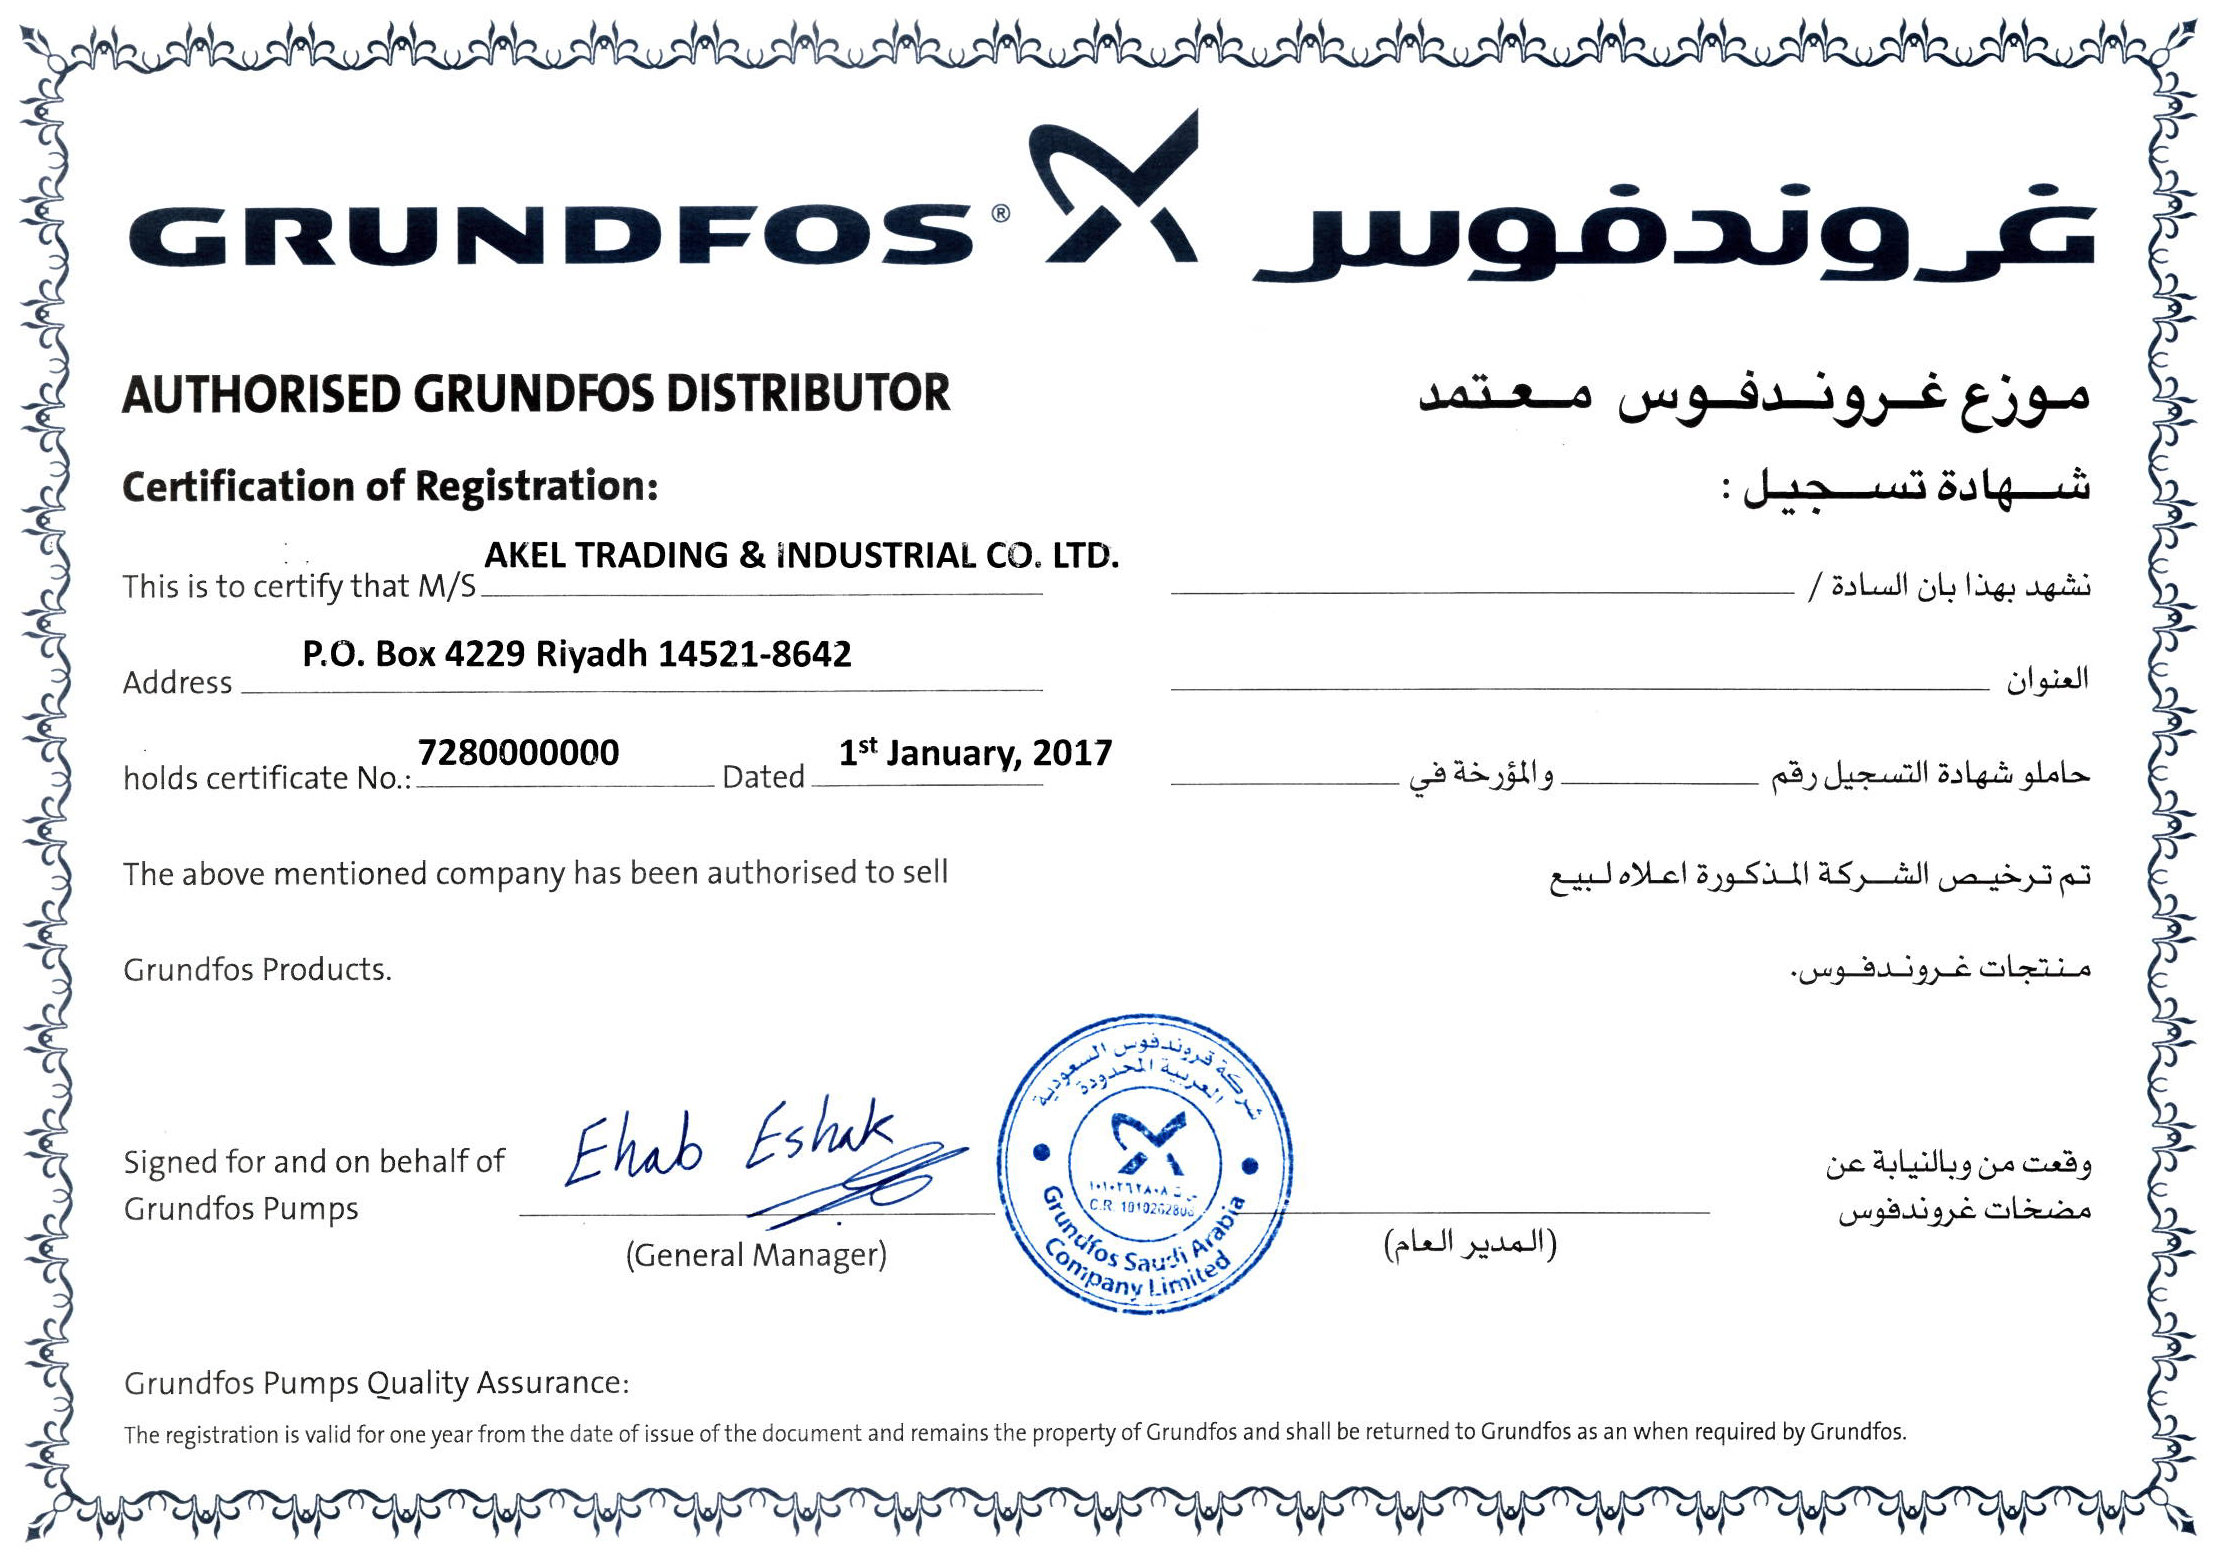 Authorized Distributor of GRUNDFOS